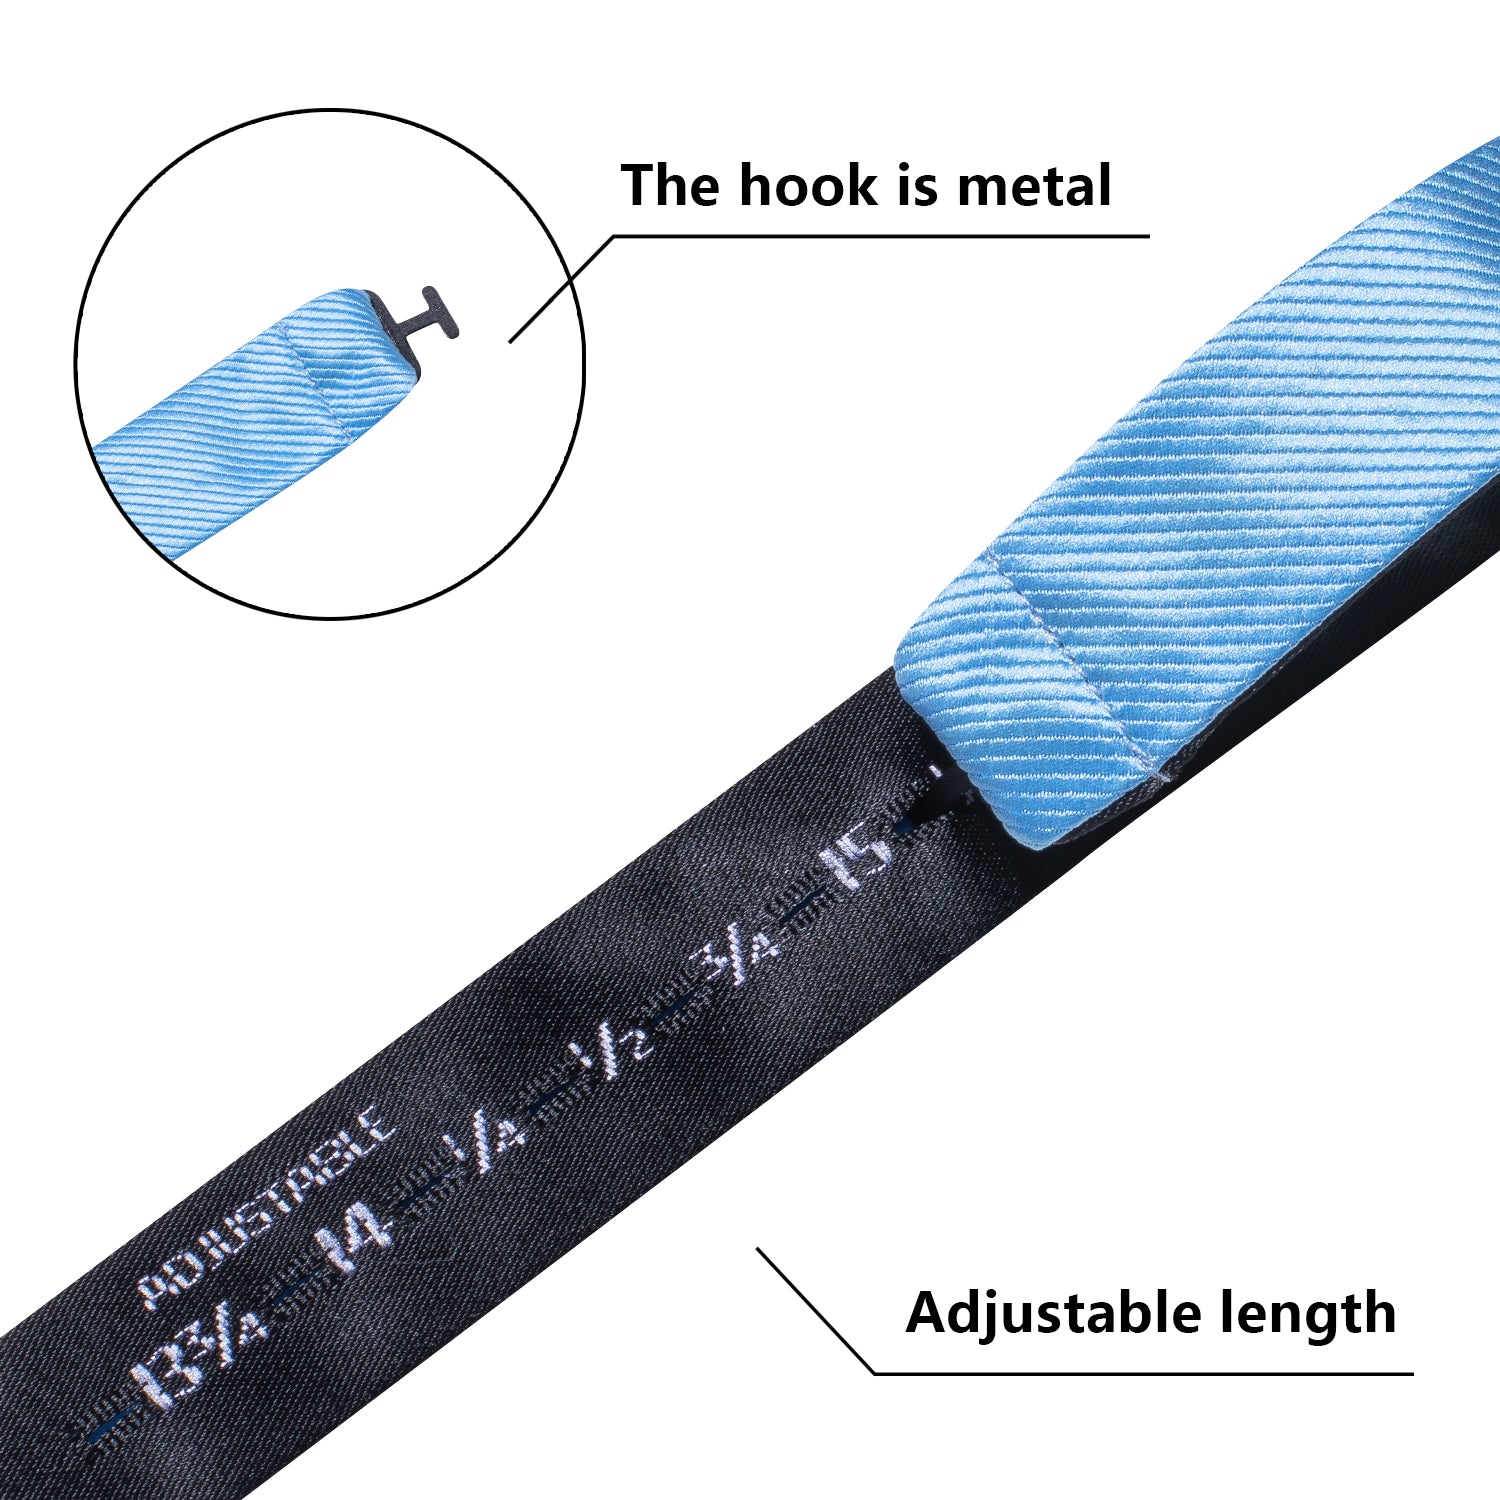 Light Blue Striped Silk Self-tied Bow Tie Pocket Square Cufflinks Set